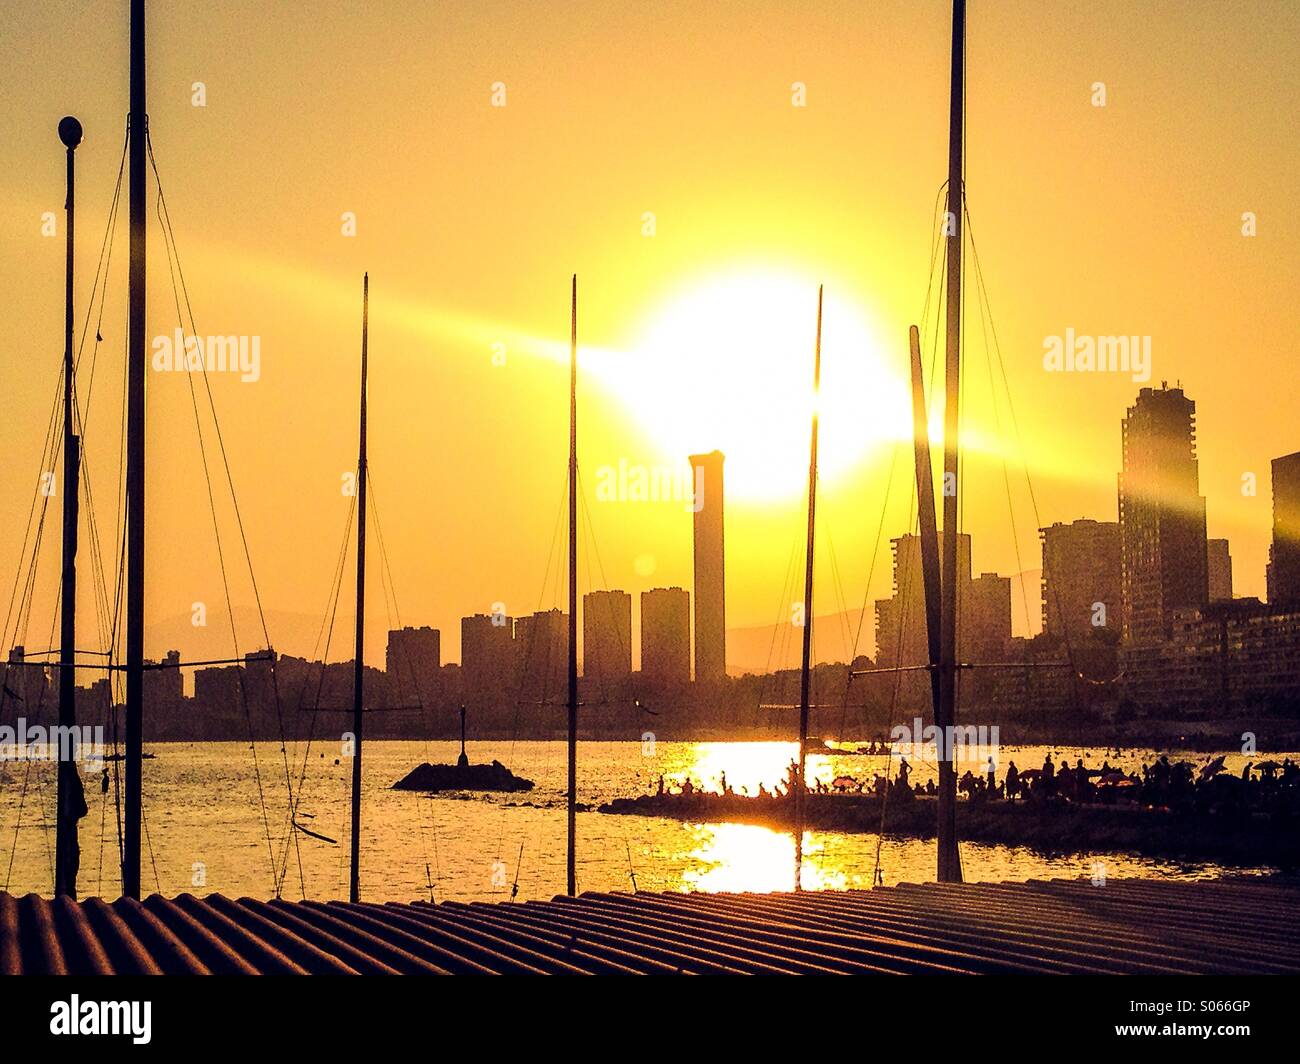 View of Benidorm skyline at sunset through yacht masts Stock Photo